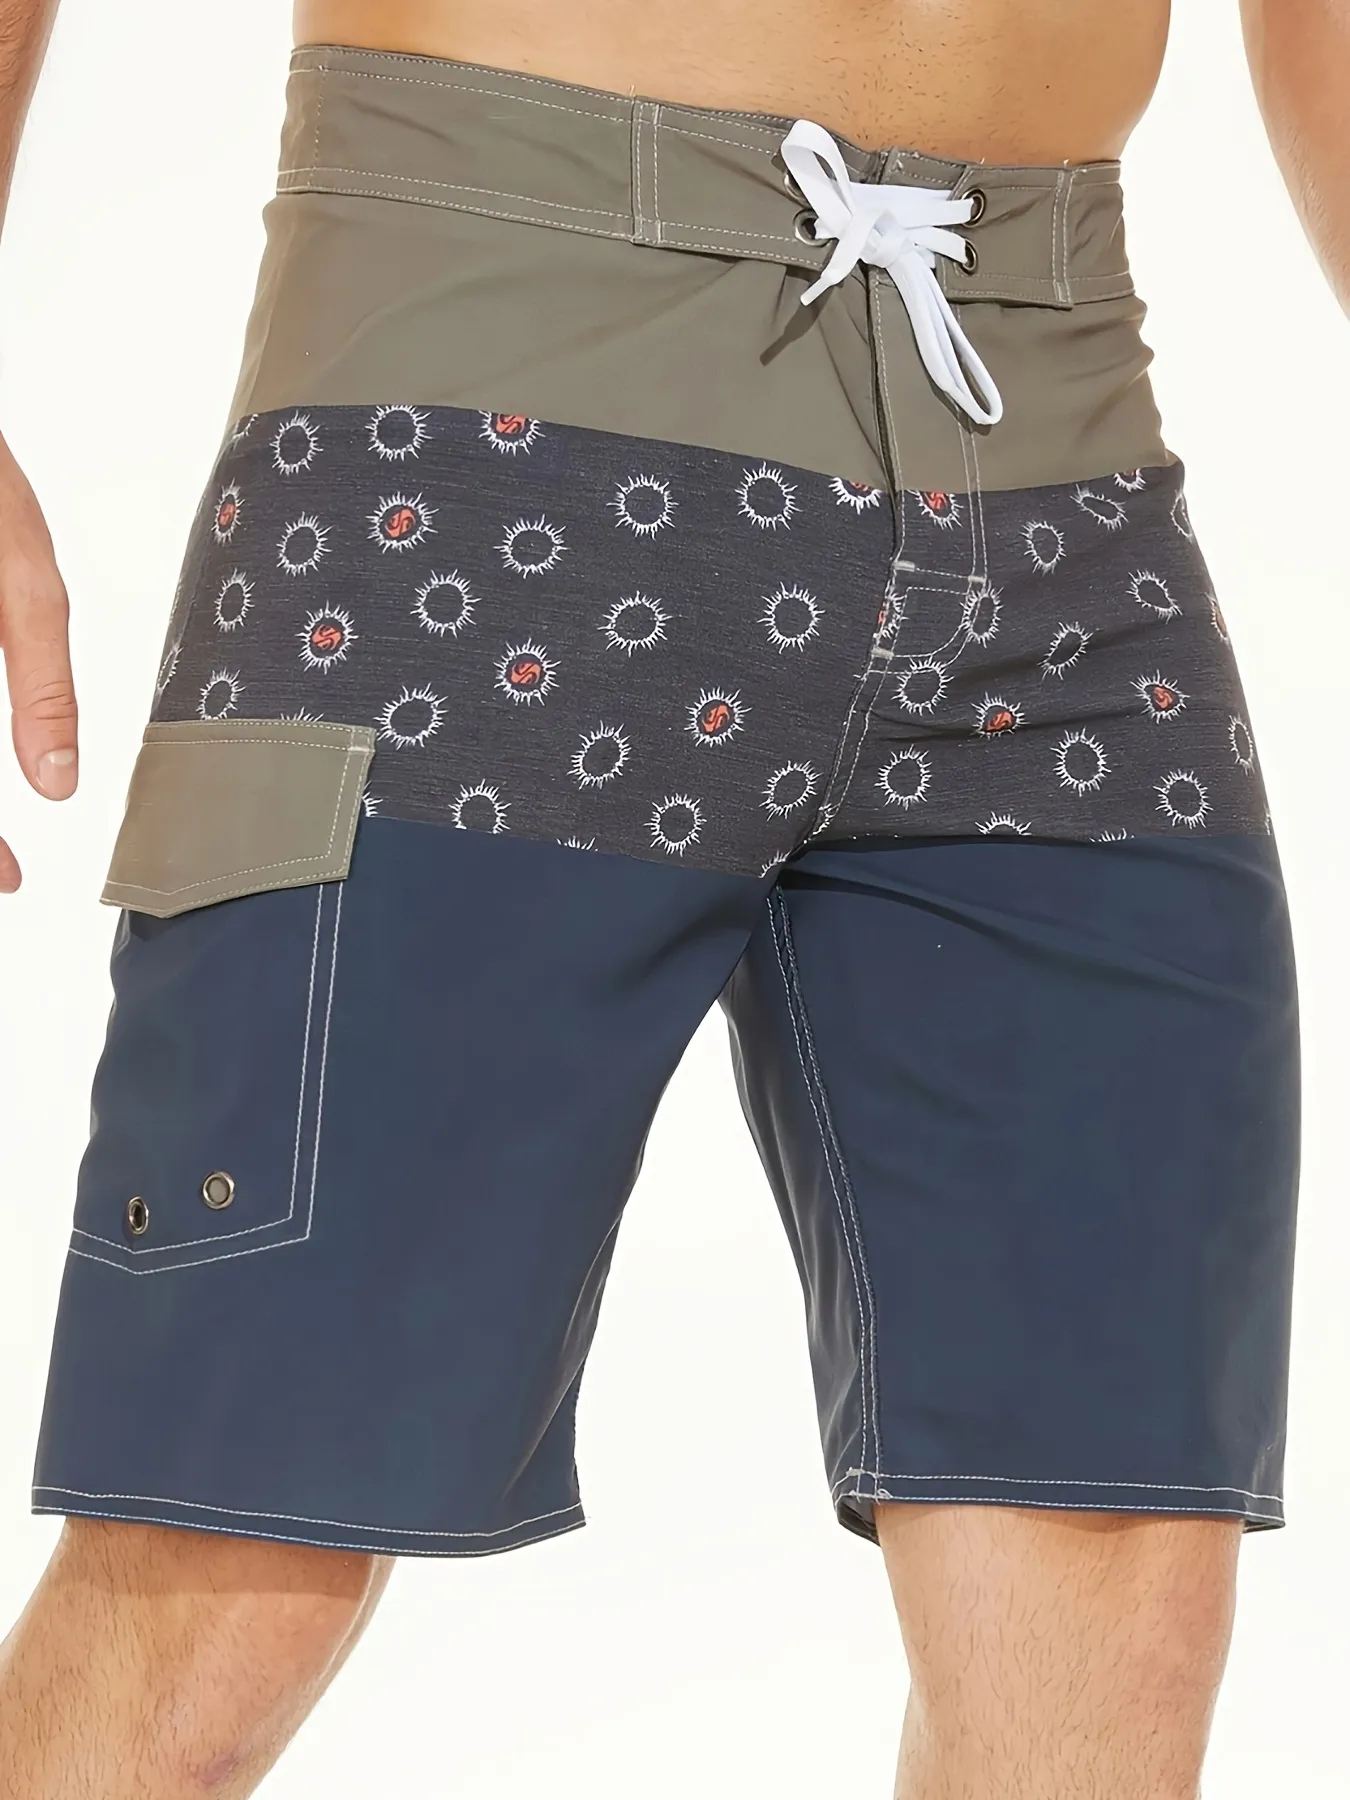 Man korte motorrijder shorts samll maat order maat omhoog, casual geprinte taille strandbroek voor mannen